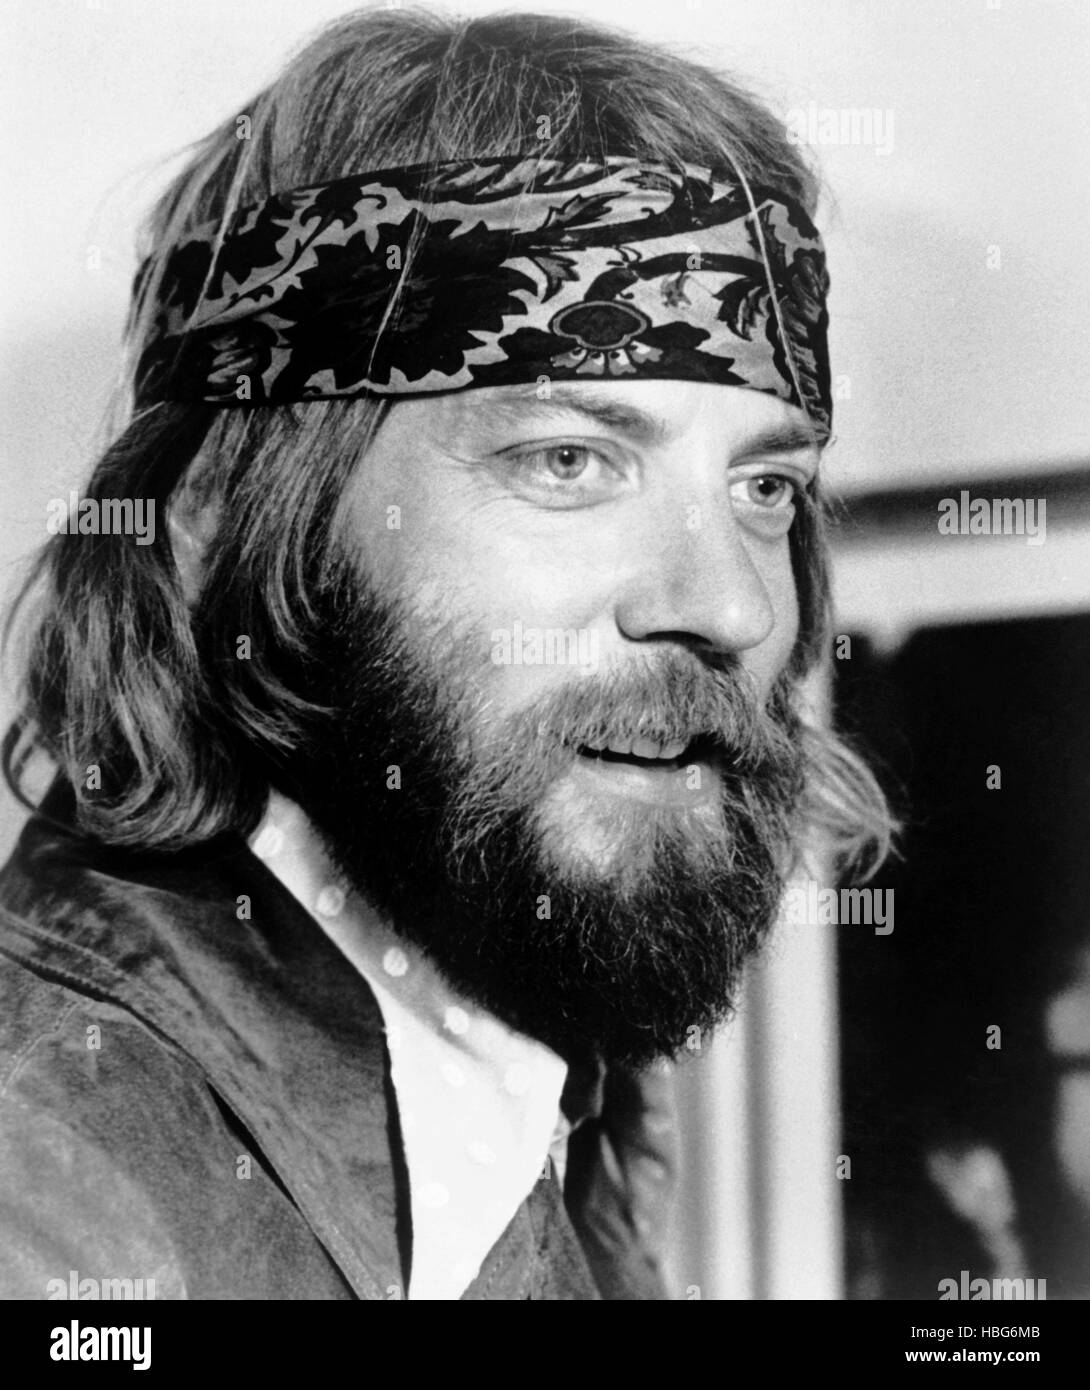 ALEX IN WONDERLAND, Donald Sutherland, 1970 Stock Photo - Alamy